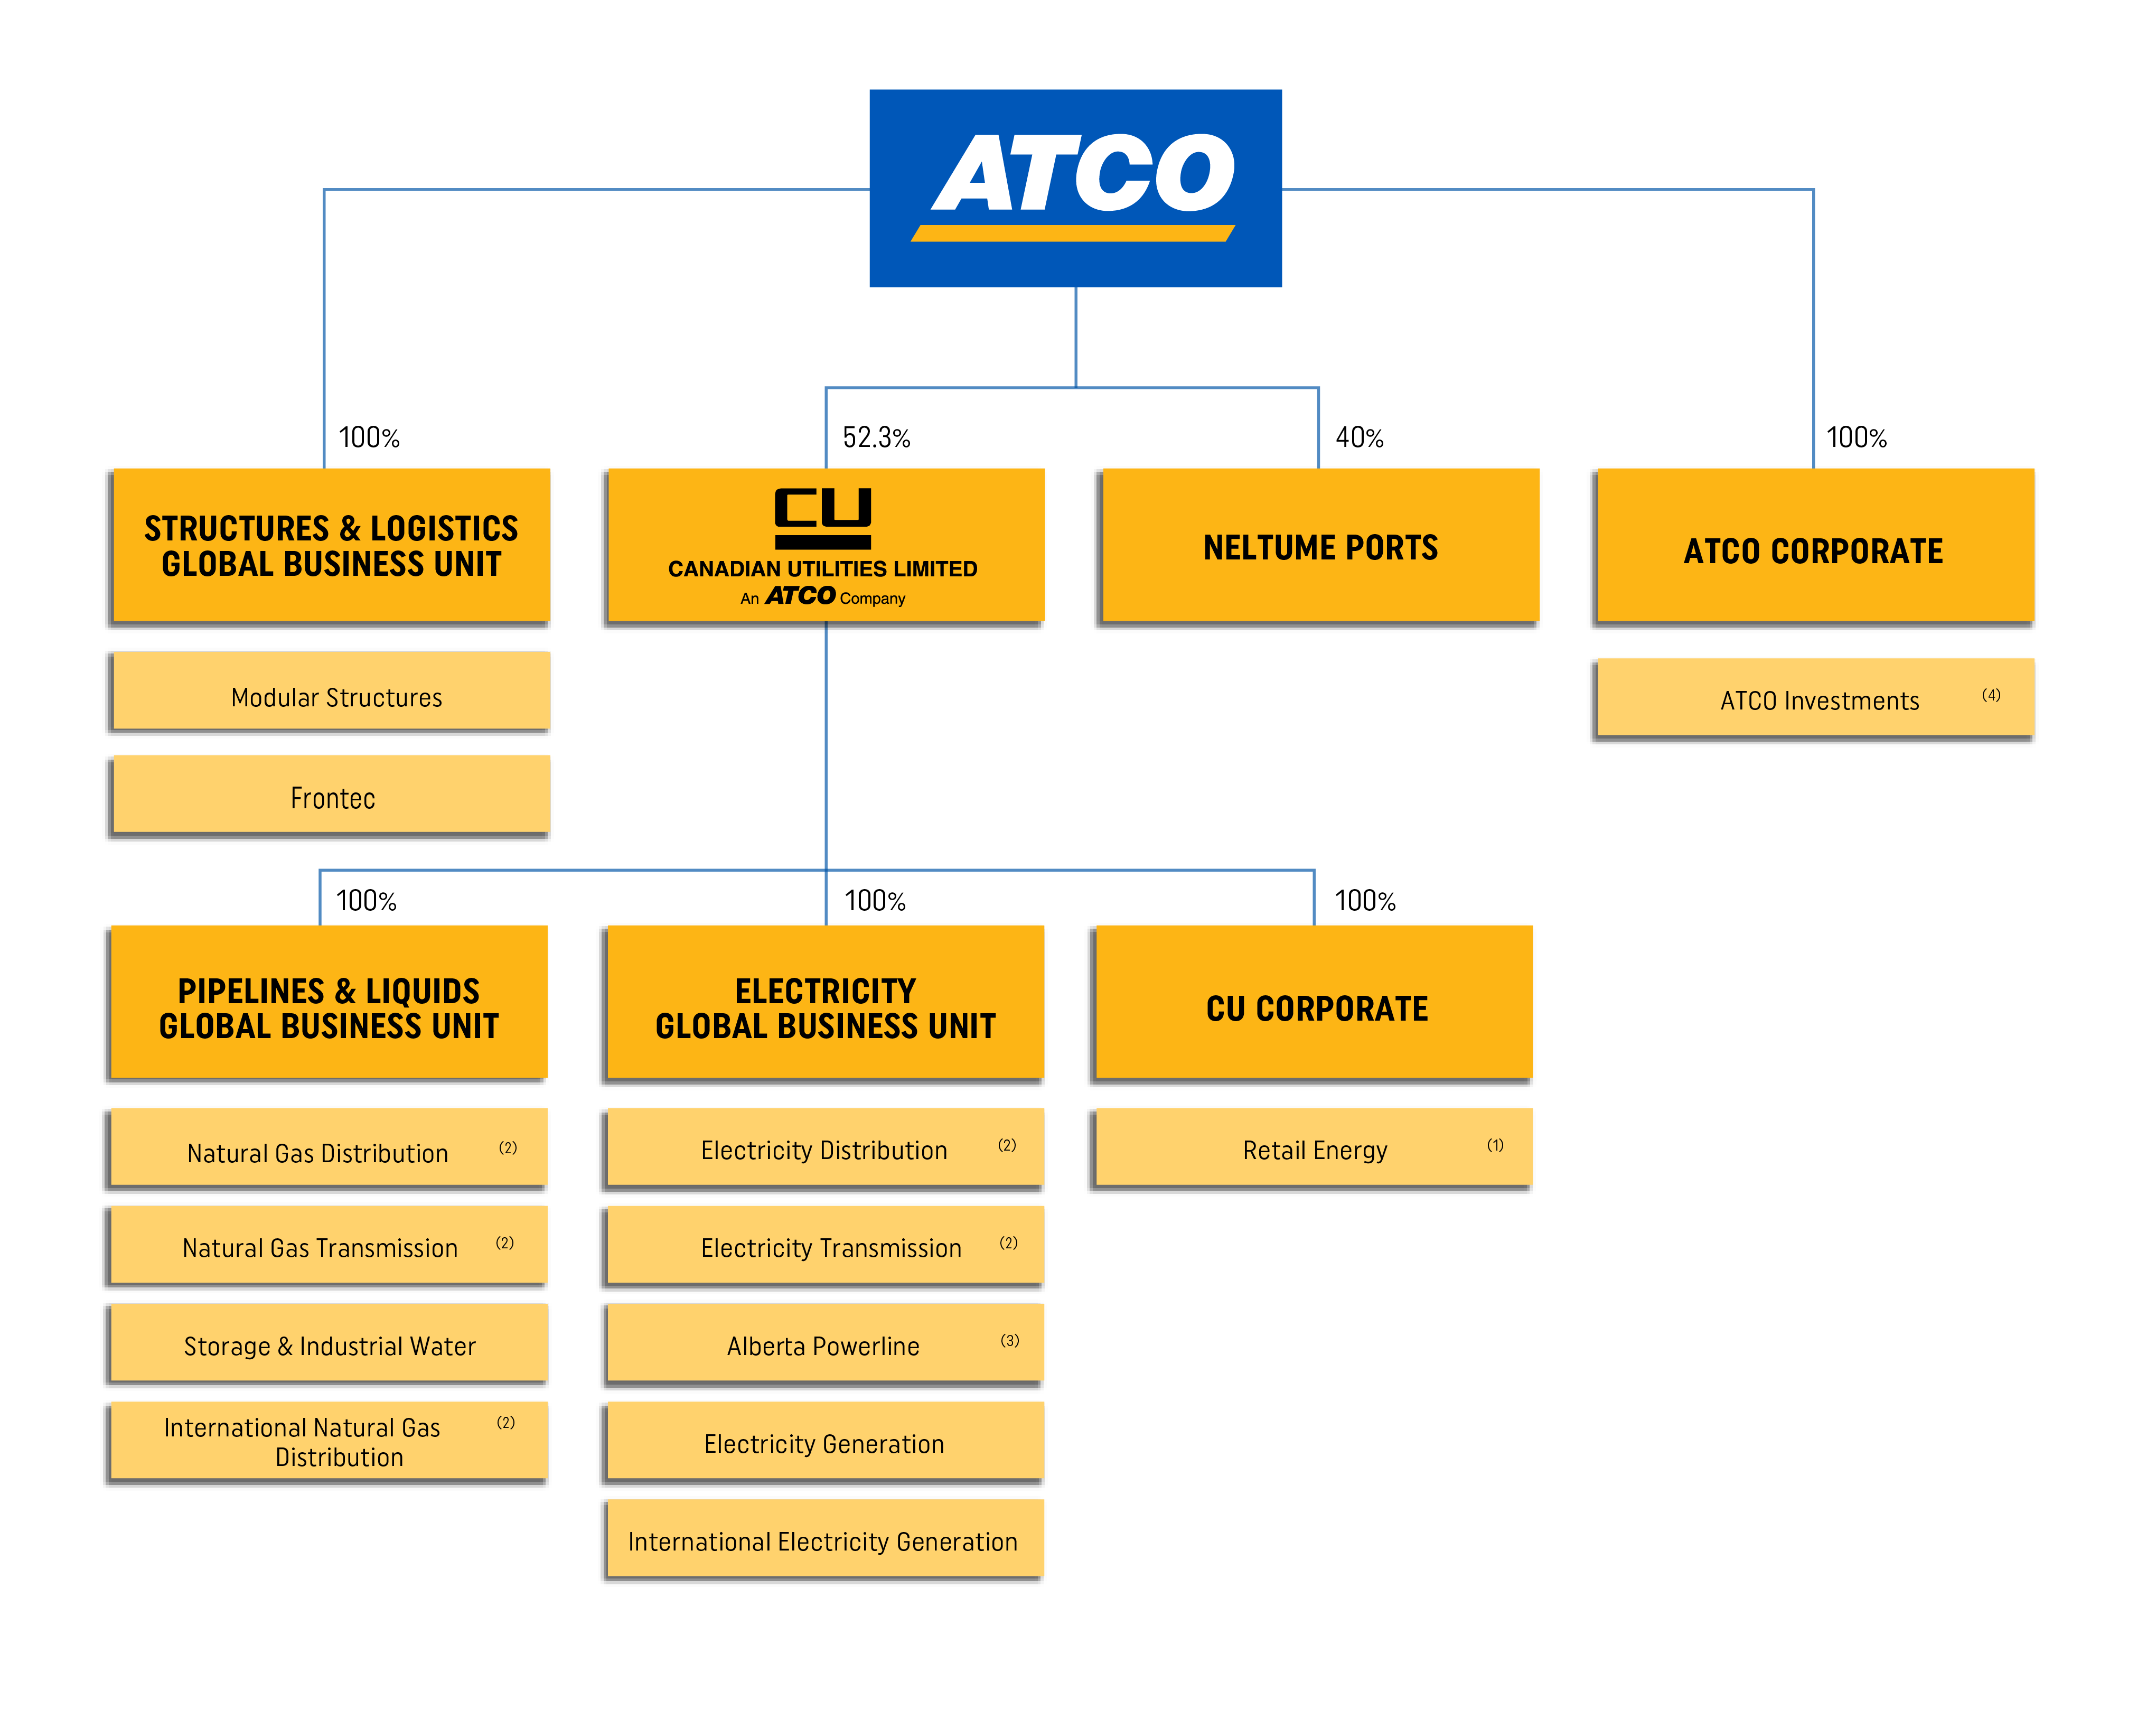 Government Of Alberta Organizational Chart